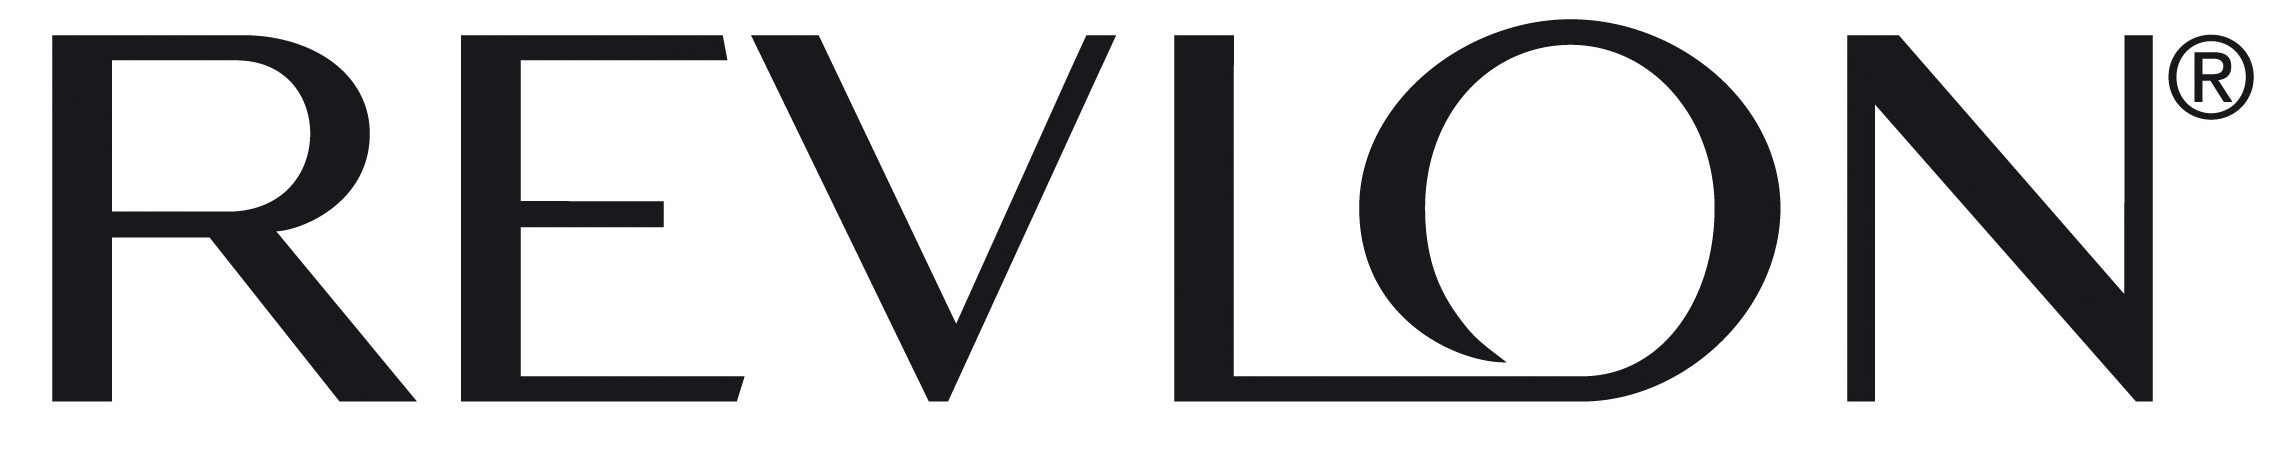 Revlon Logo PNG - 179875